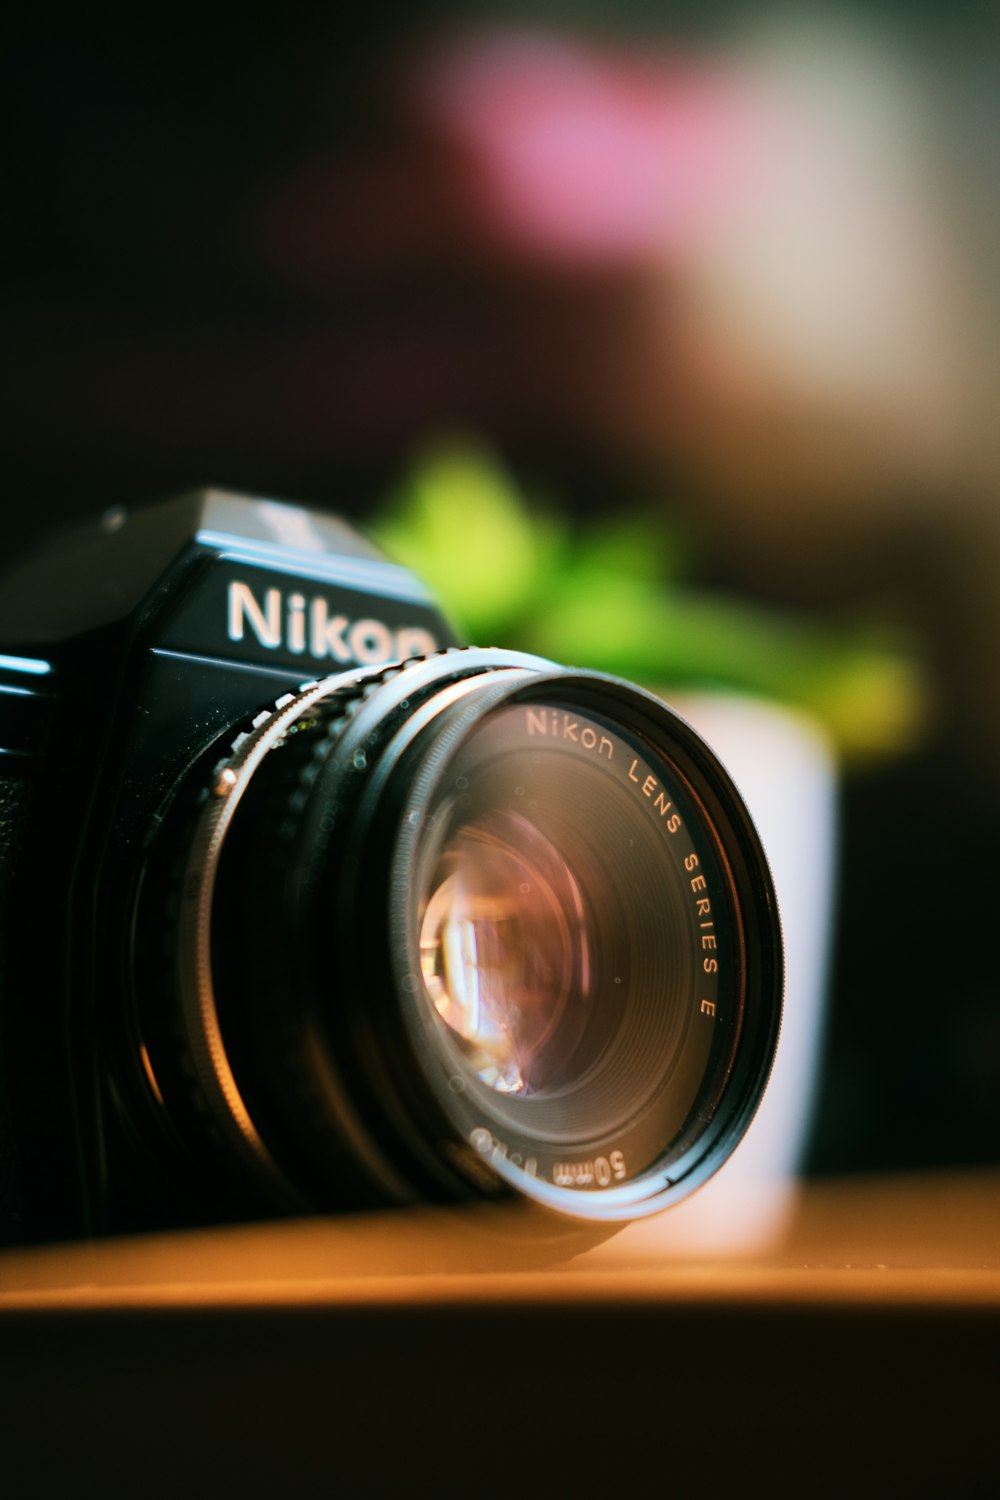 Nikon camera on wooded board